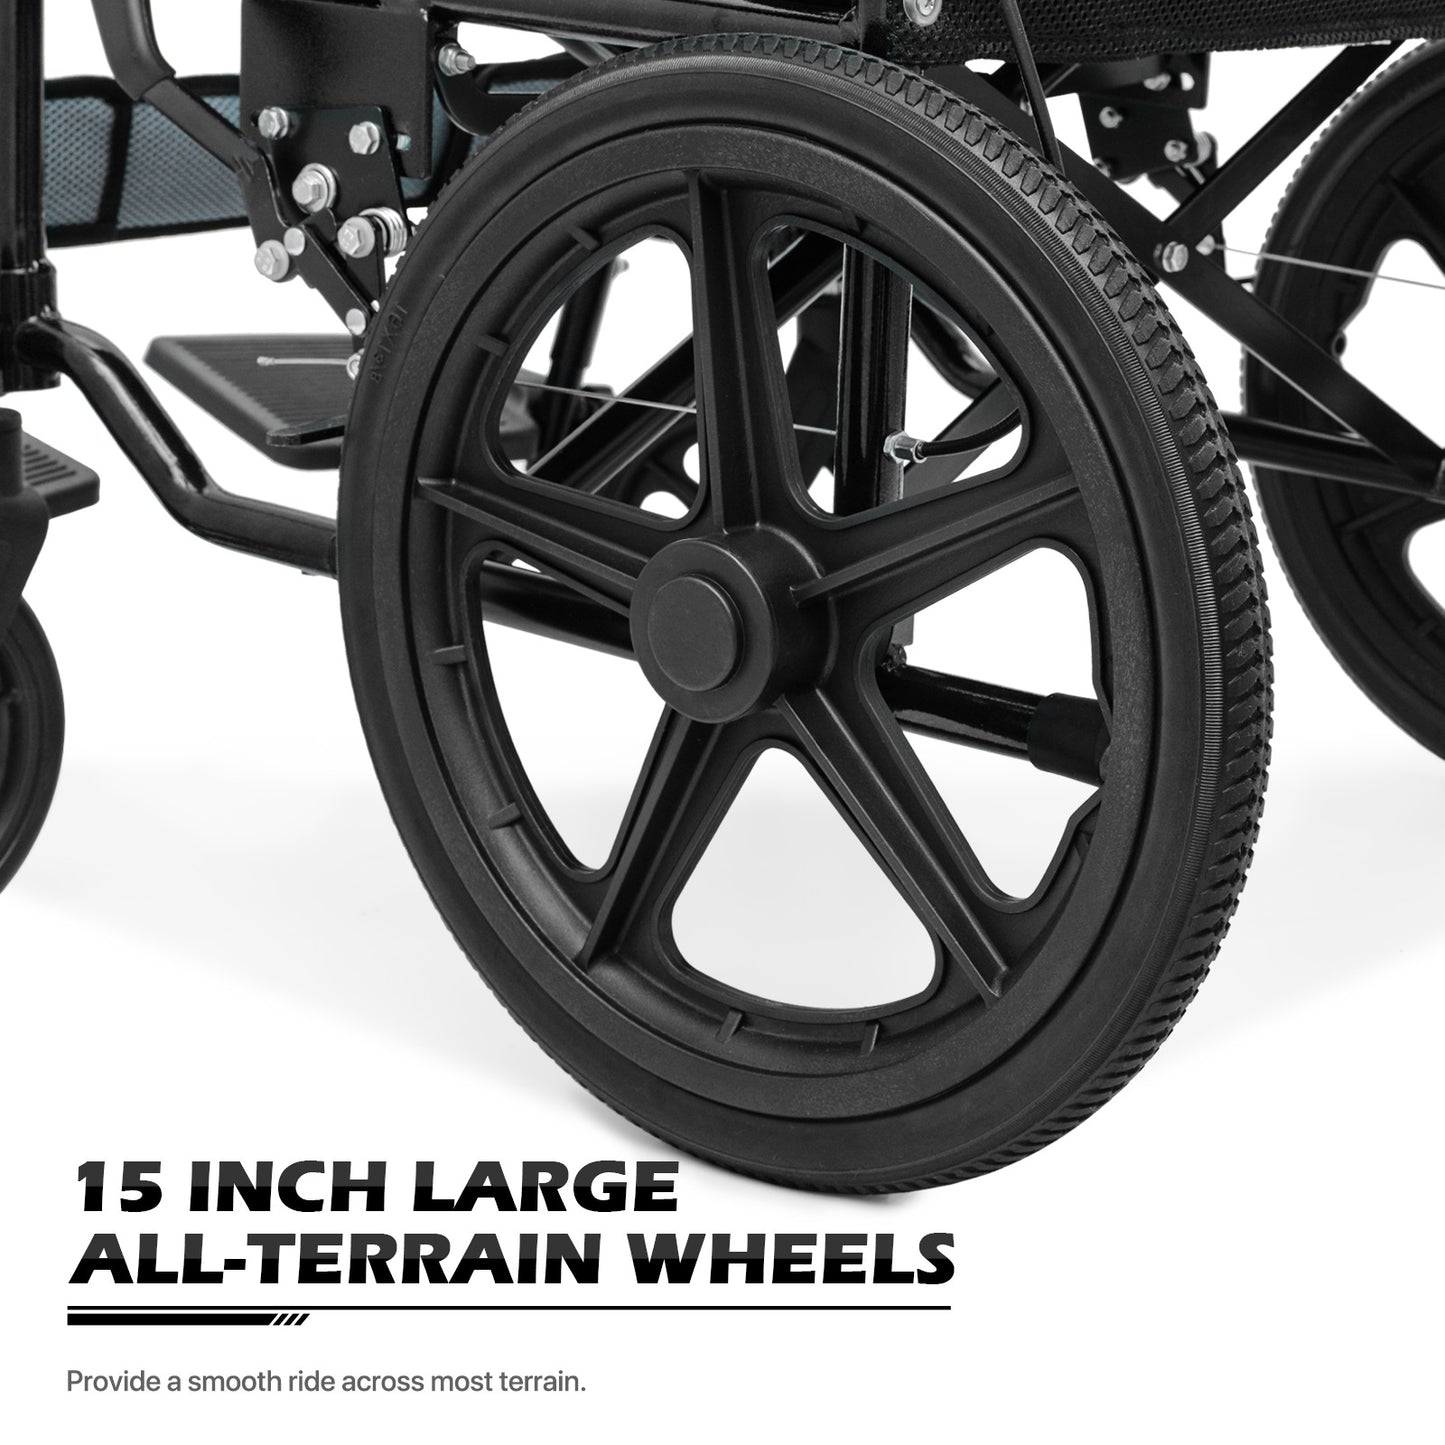 Transport Wheelchair - with Handbrake, Cushion - Black